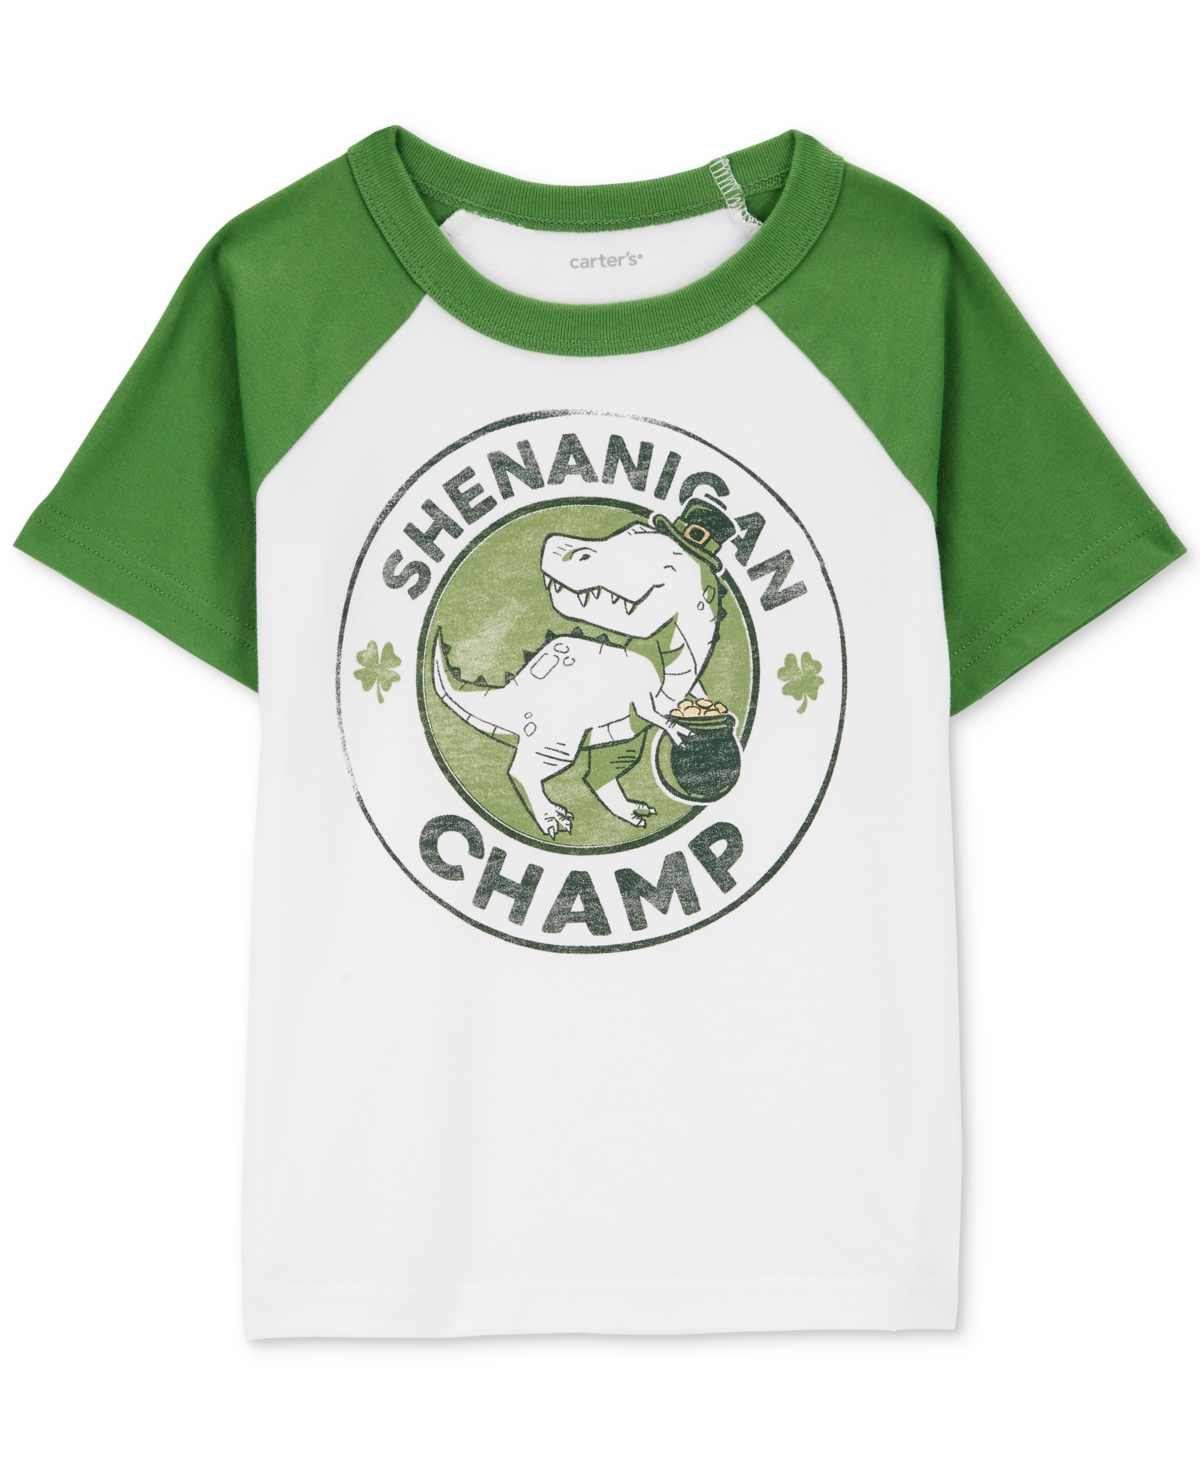 Carter's Babies' Toddler Boys Shenanigan Champ Graphic T-shirt In Green